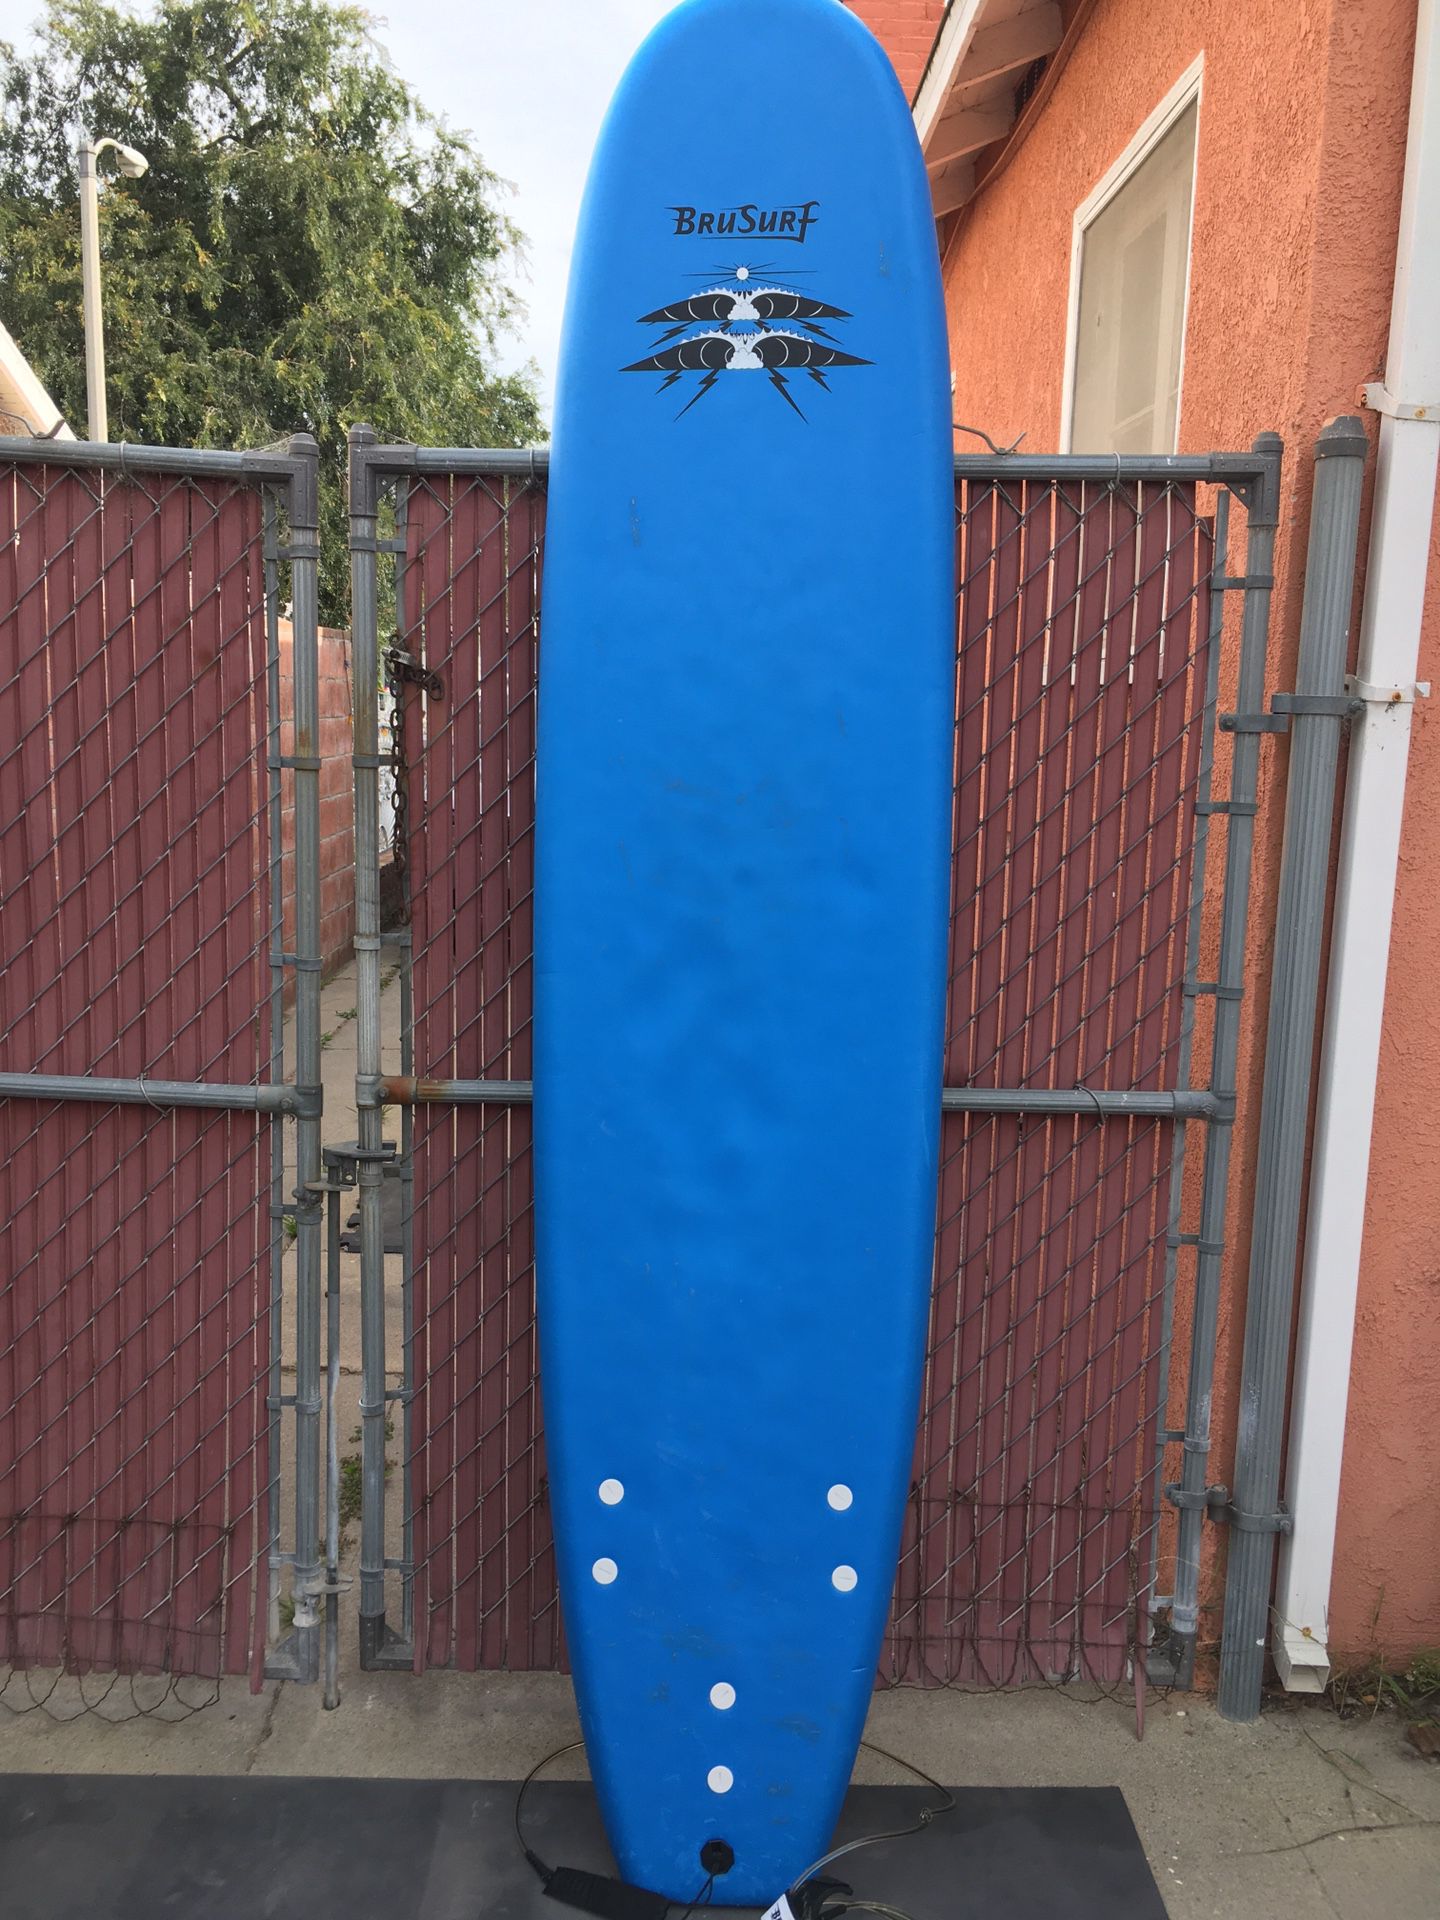 Brusurf 8 foot surfboard